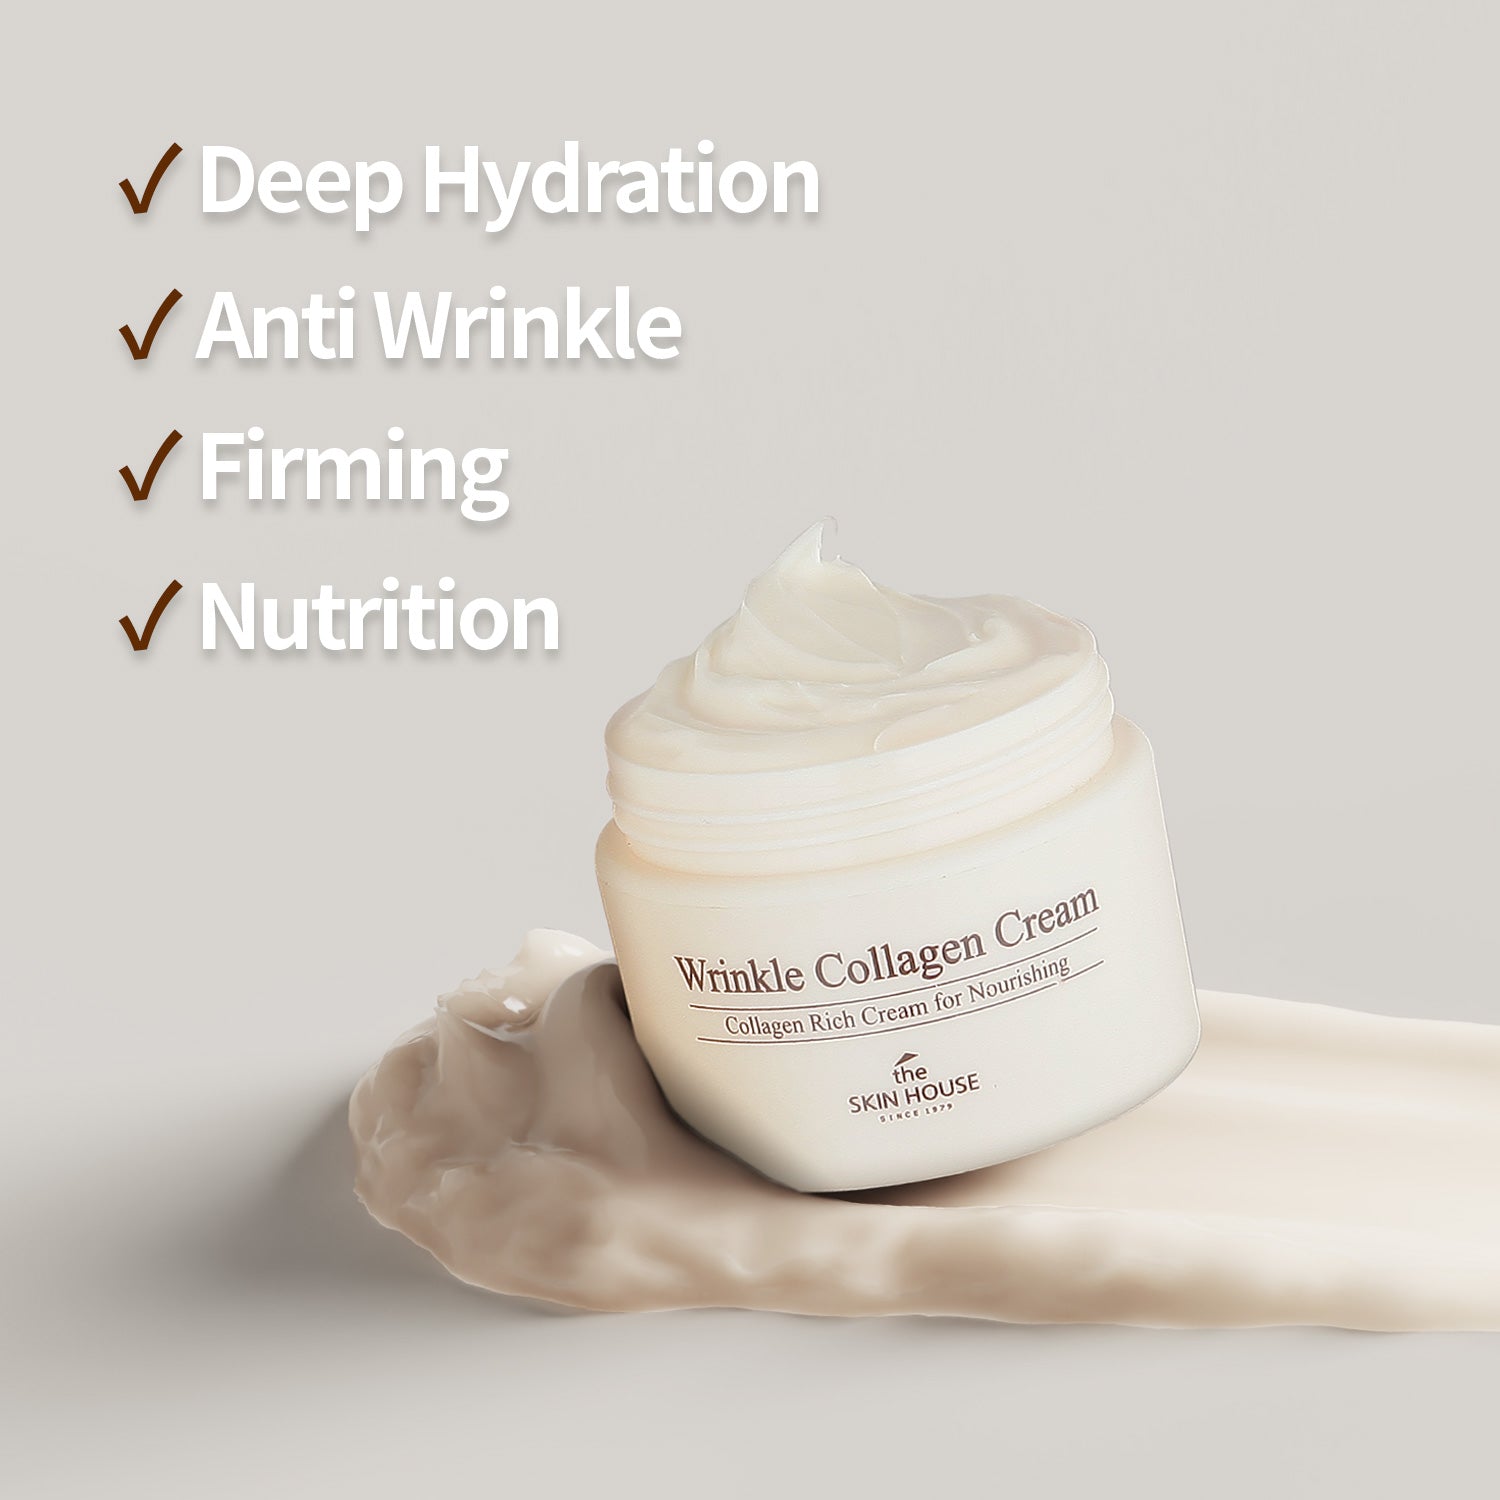 Wrinkle Collagen Cream